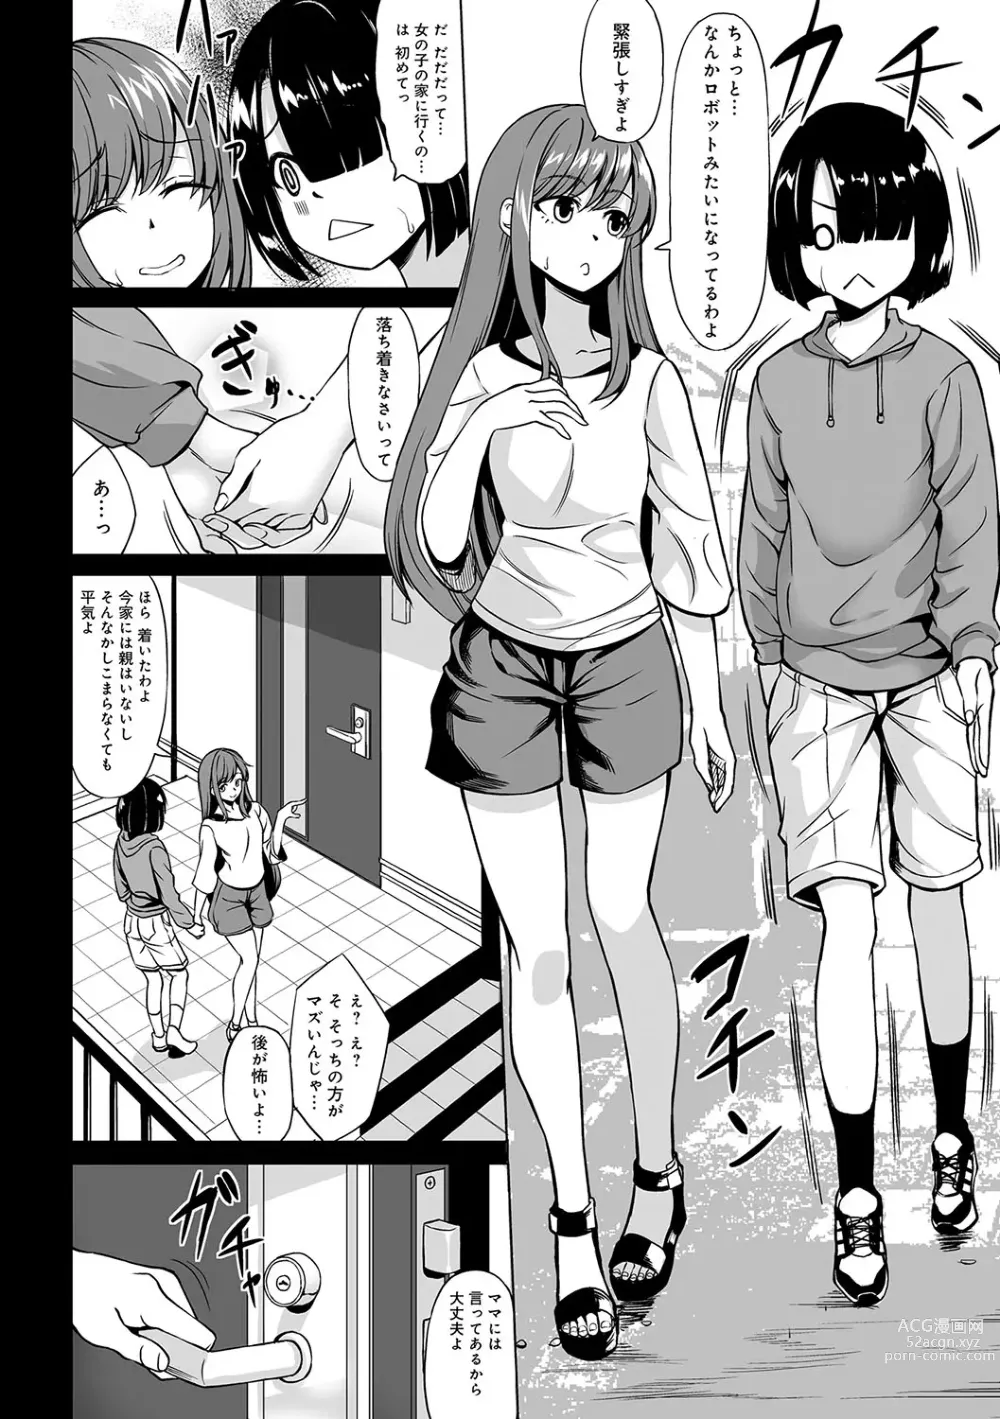 Page 5 of manga A Cup no Kanojo yori J Cup no Kuro Gal no Hou ga Yoi yo ne? - Youd rather have a tanned gal with J-cup boobs than an A-cup girlfriend, wouldn't you?